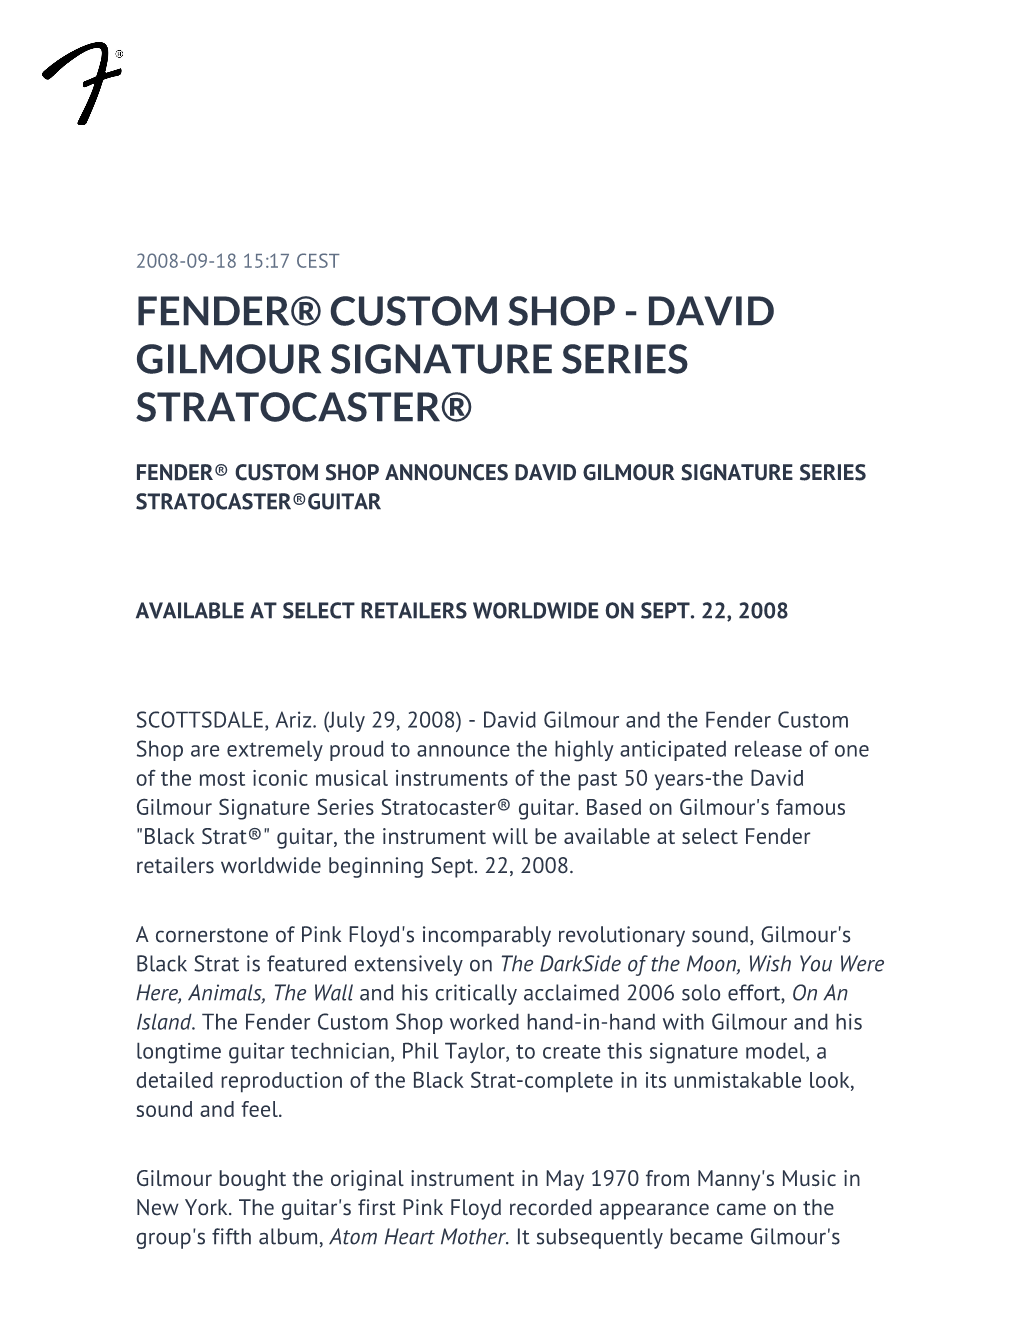 Fender® Custom Shop - David Gilmour Signature Series Stratocaster®